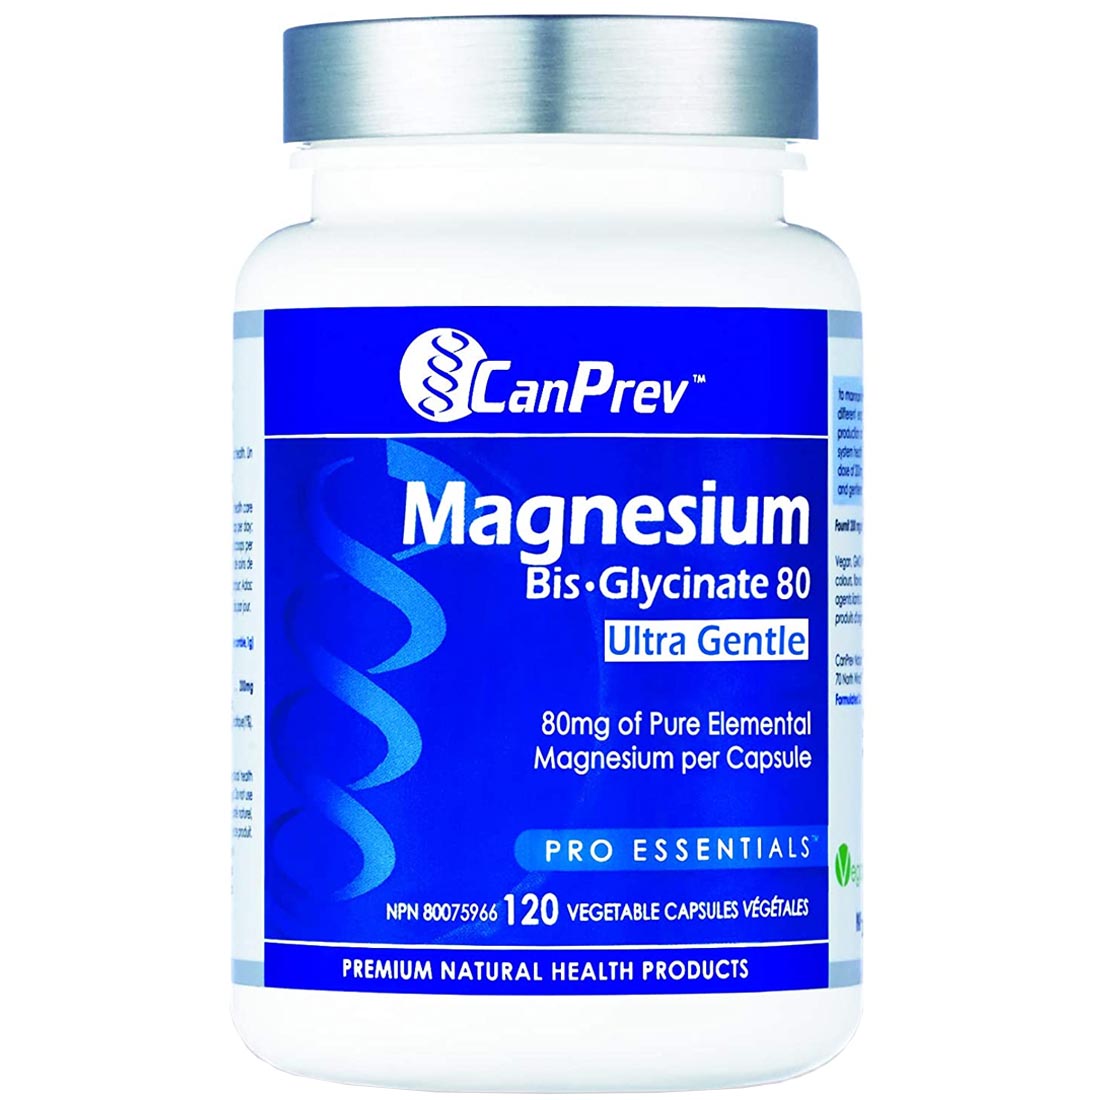 CanPrev Magnesium Bis-Glycinate 80mg Ultra Gentle